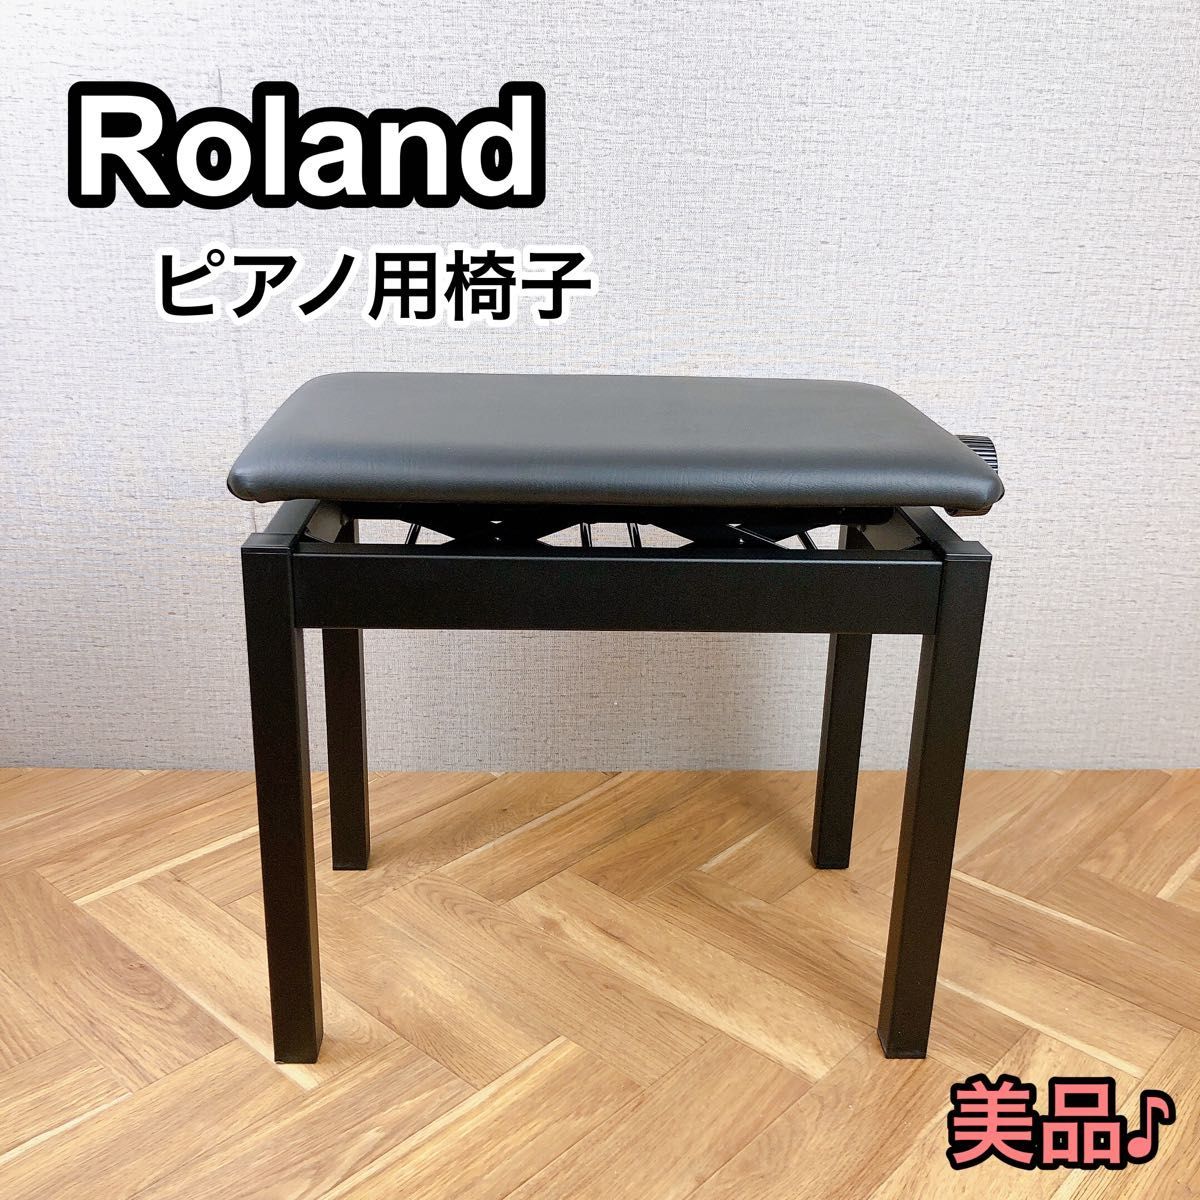 Roland ローランド ピアノ用椅子_画像1